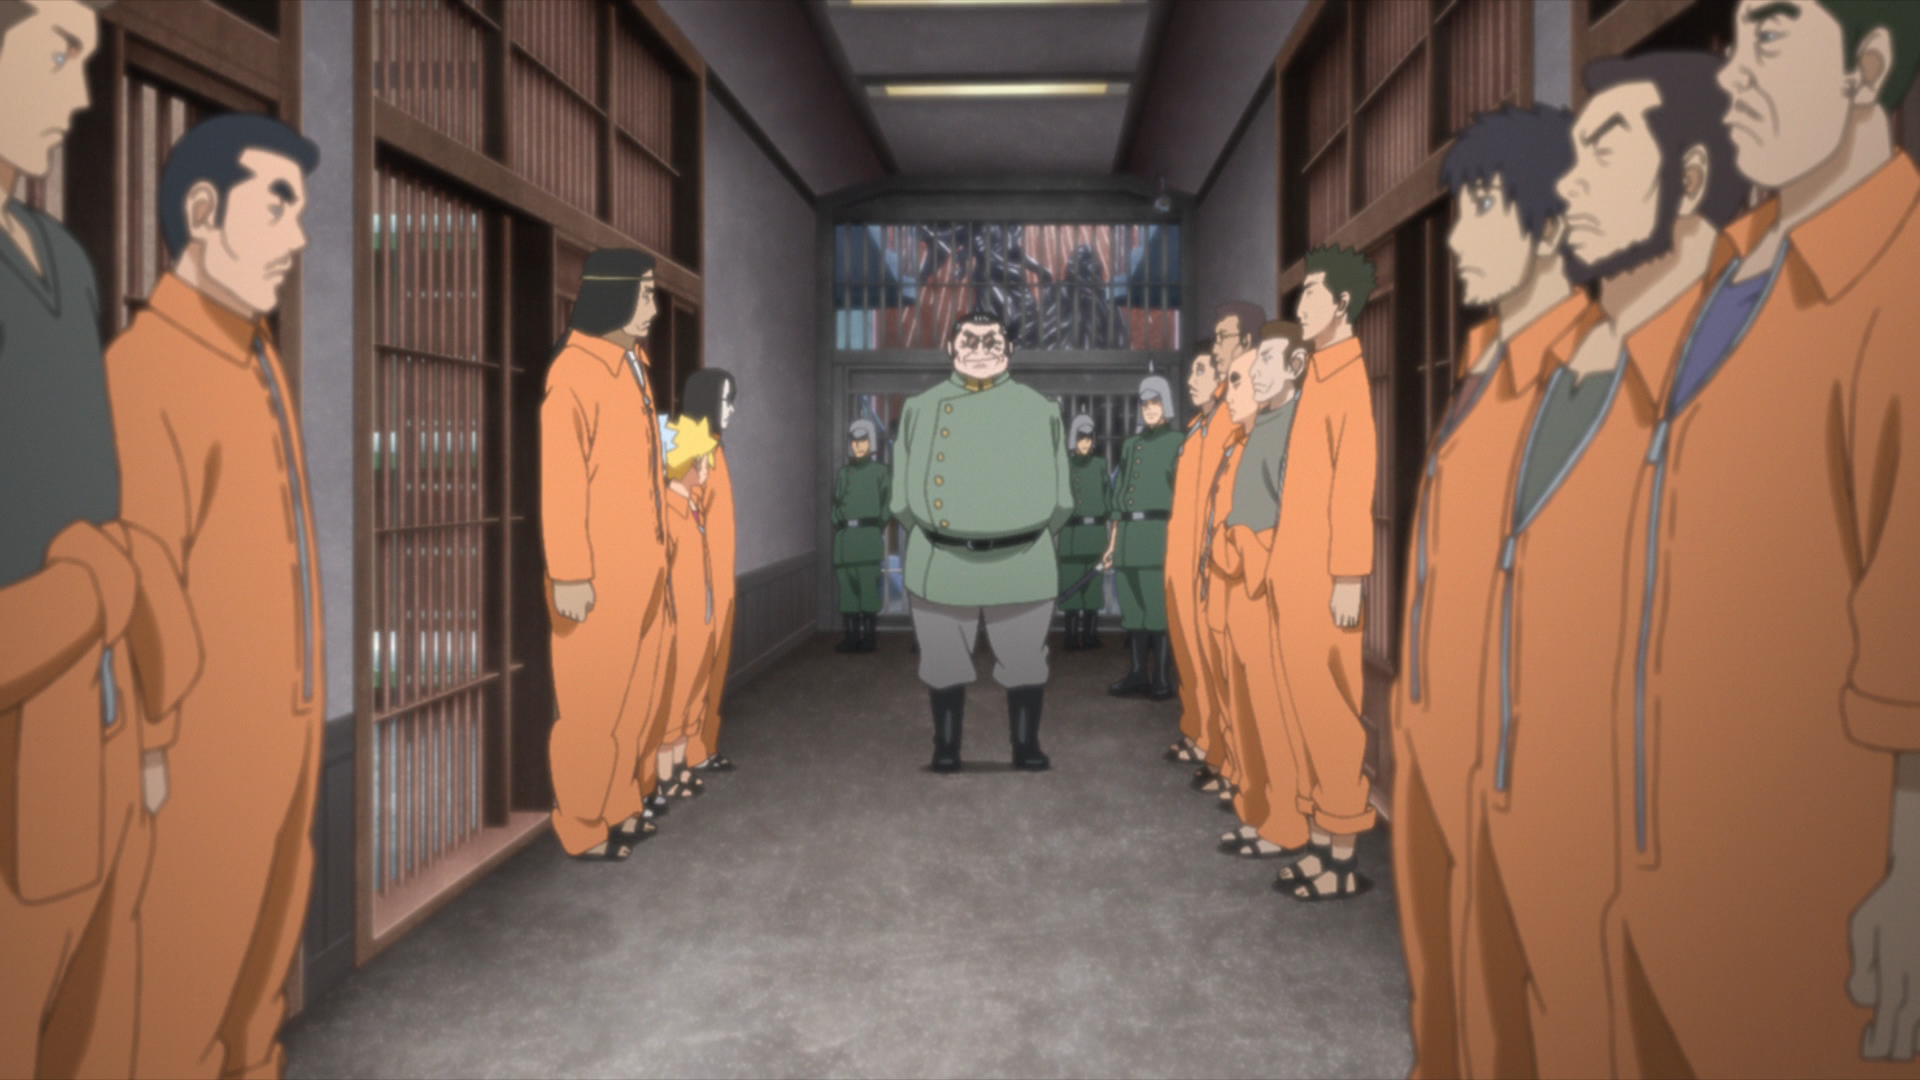 Naruto Shippuden Episode 143 Summary